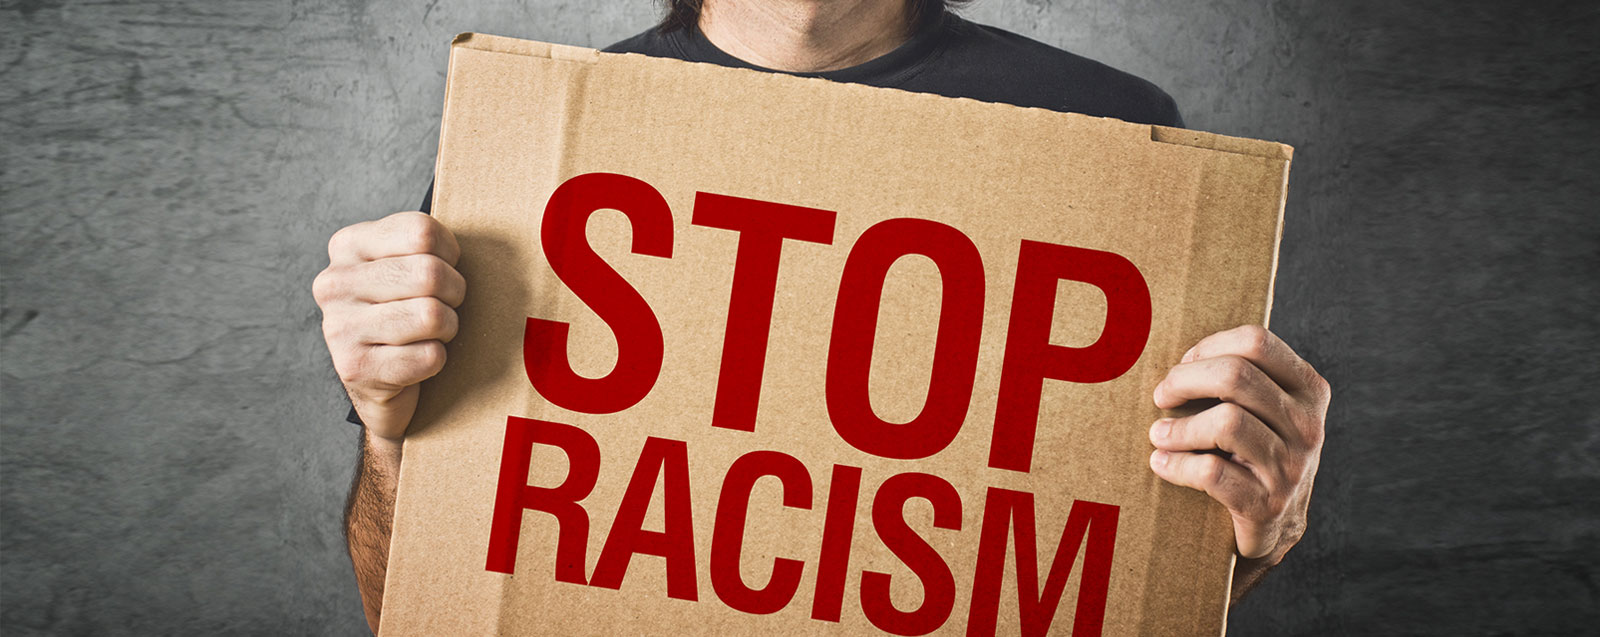 aussies stop racism